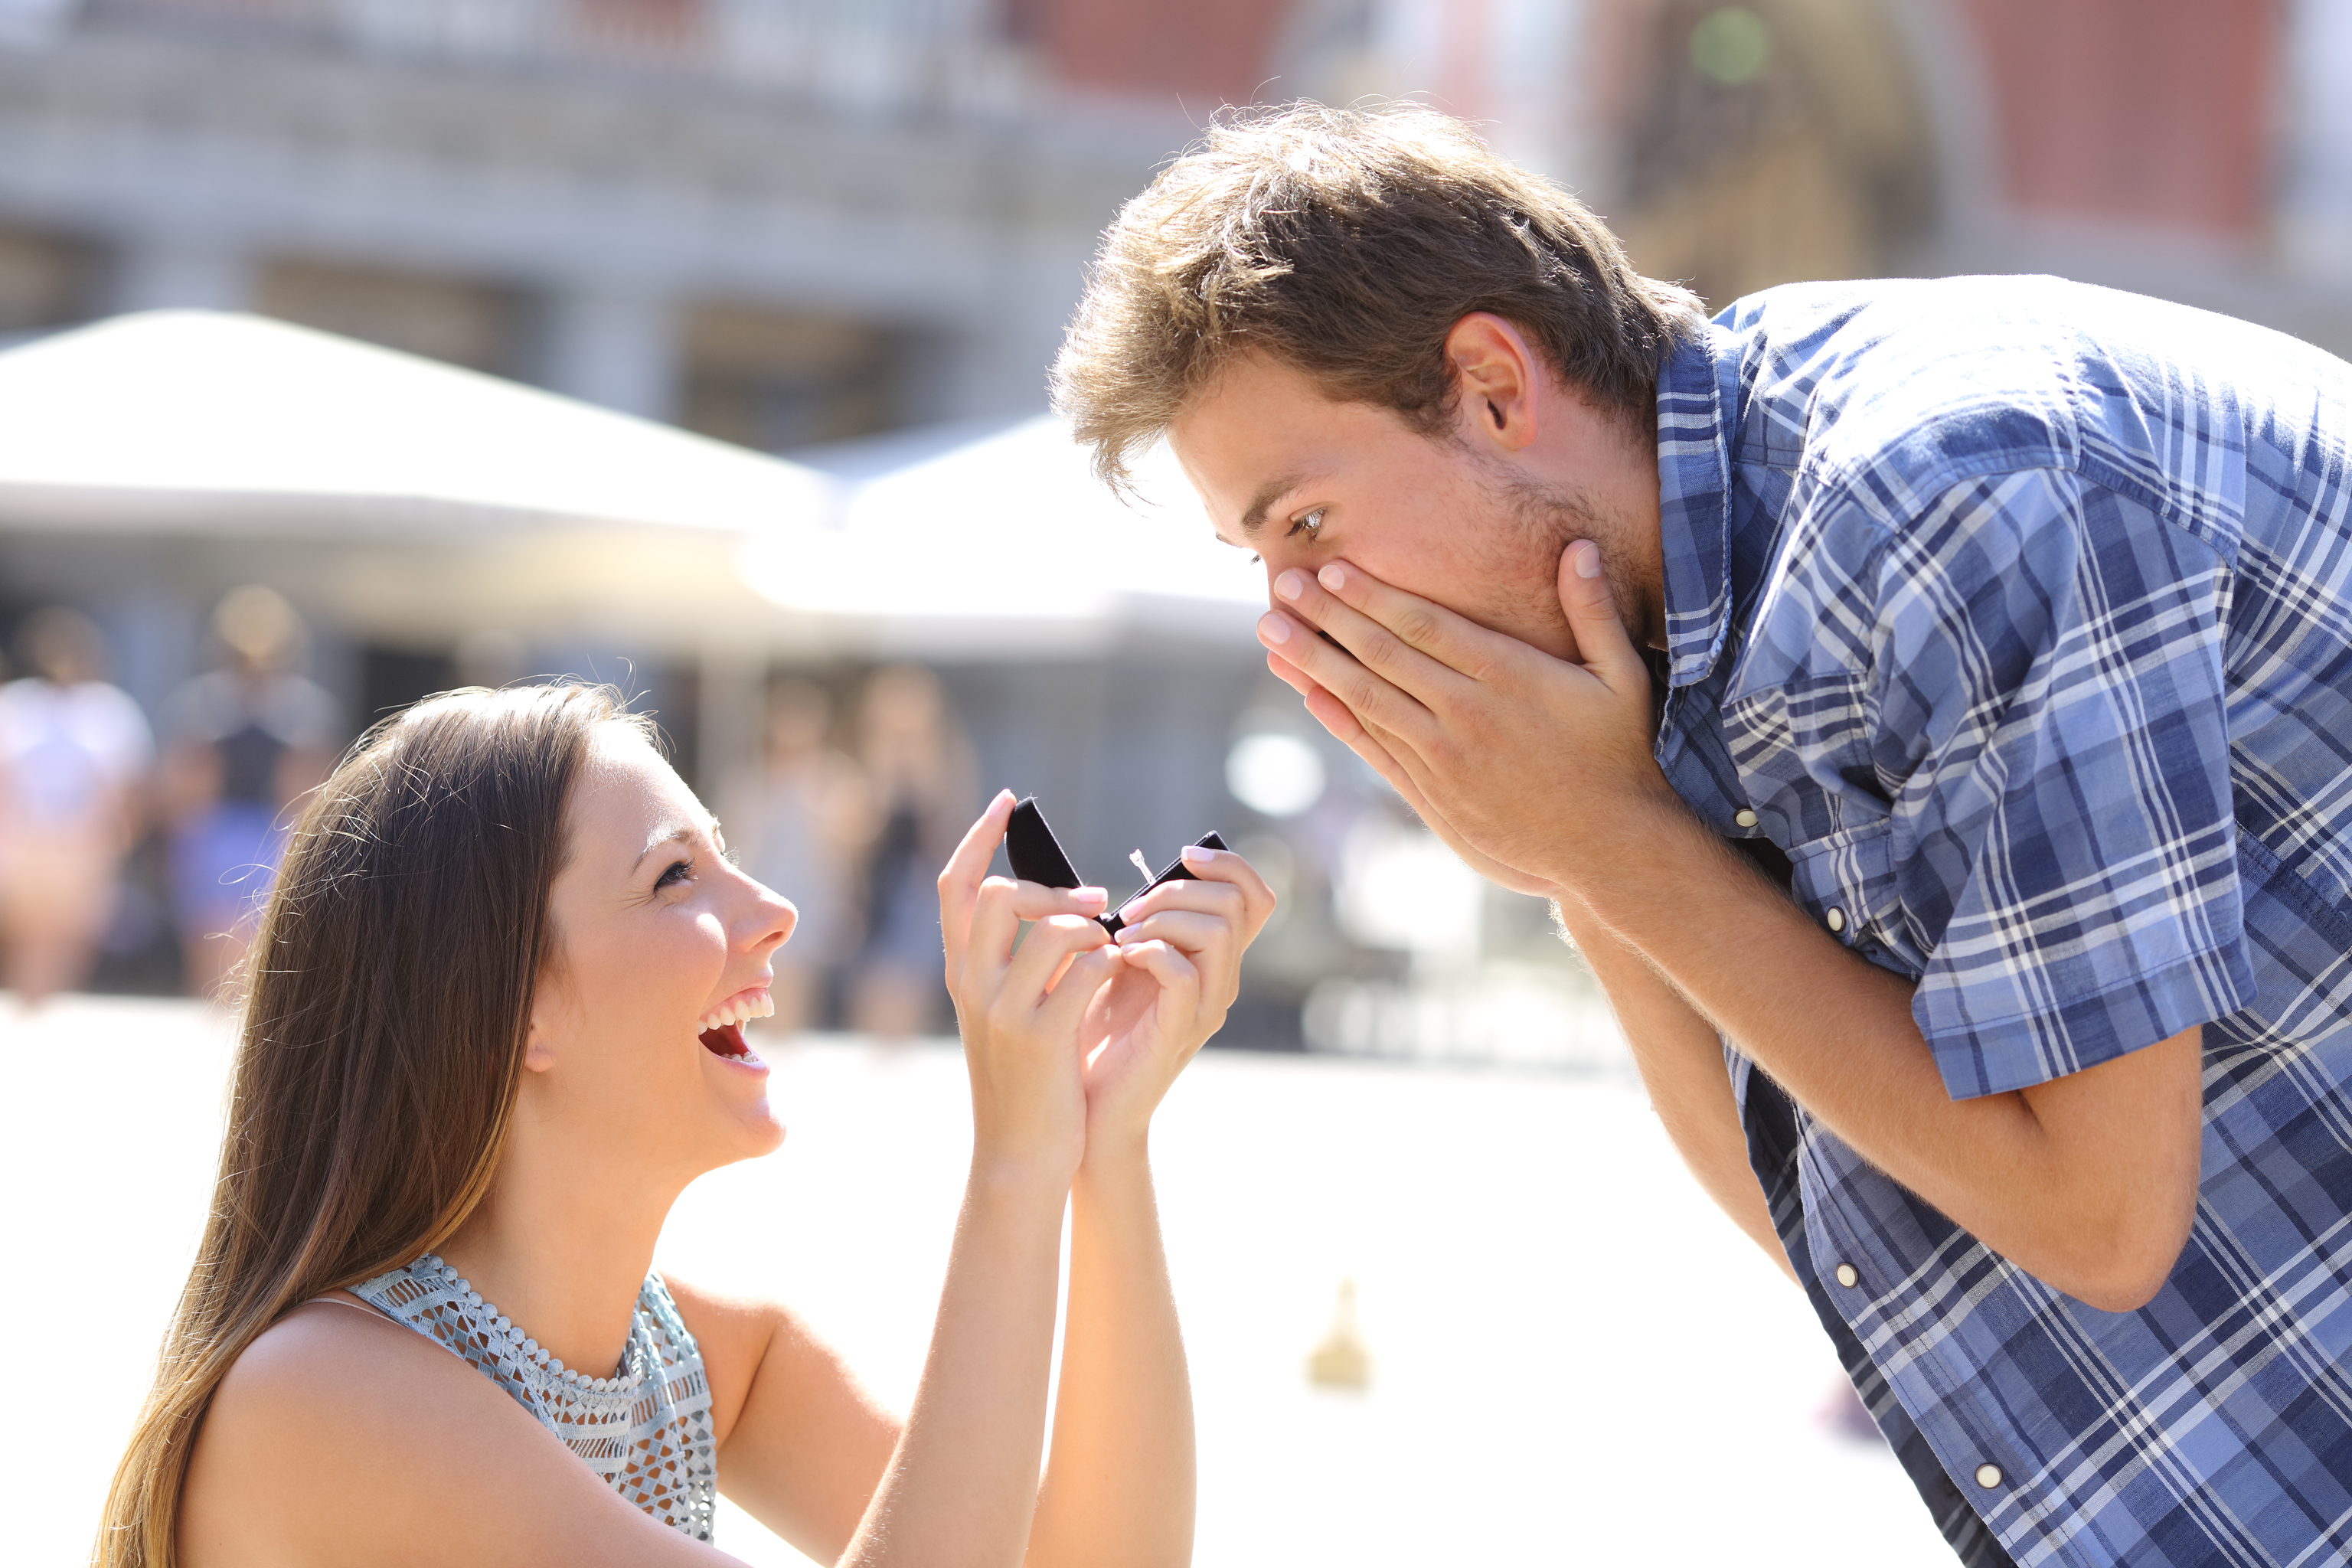 Should I propose to my boyfriend?